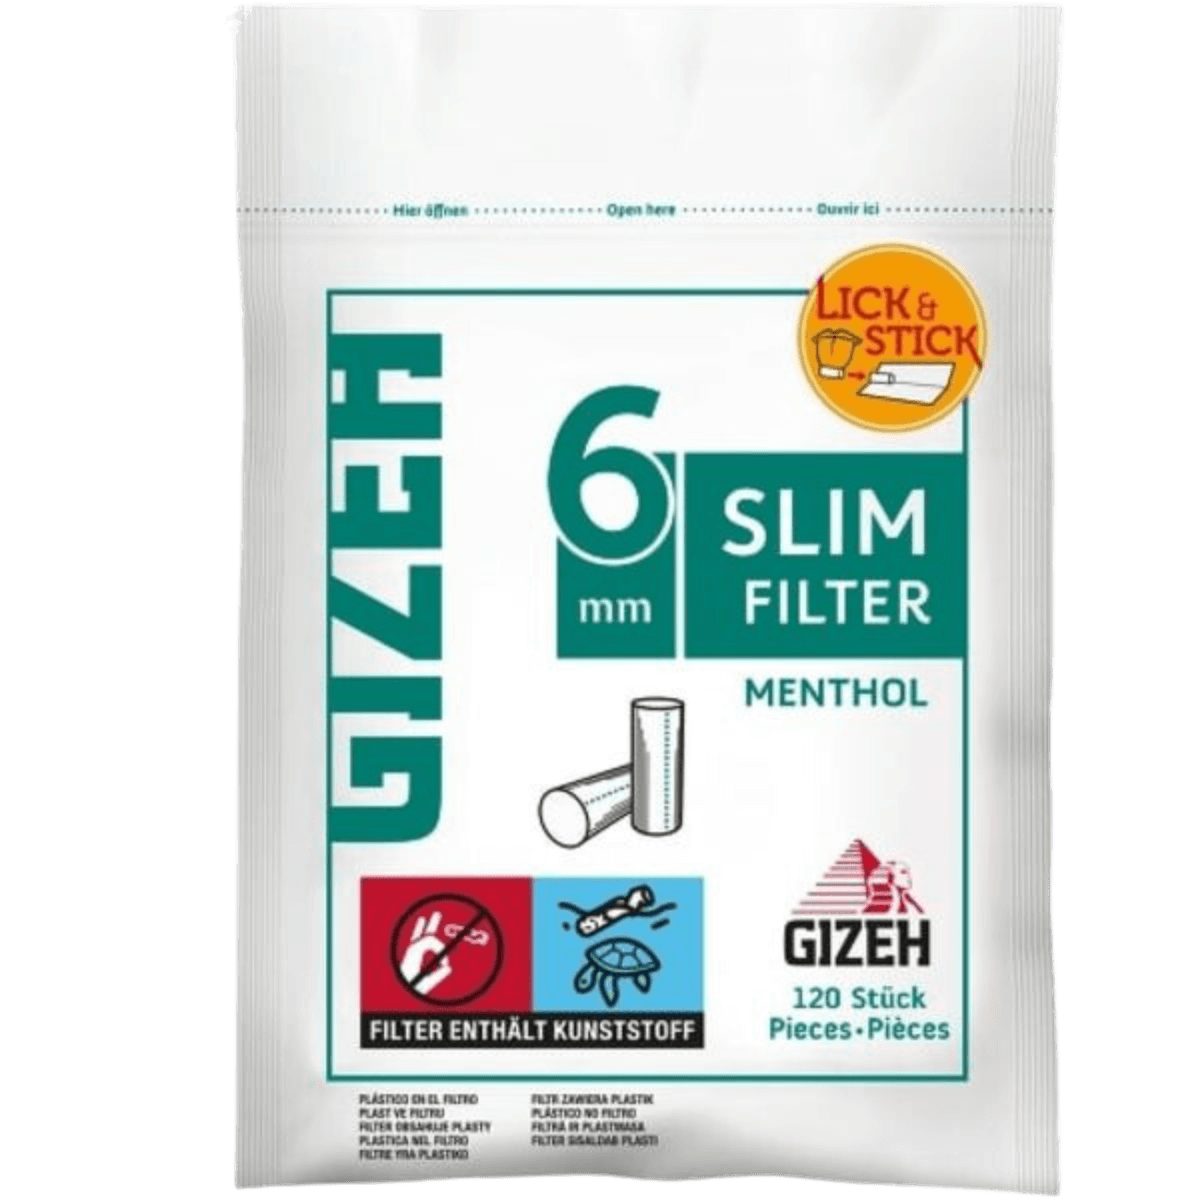 https://wolsdorff.shop/media/image/e6/6c/a6/58956_GIZEH-Slim-Menthol-Filter.png